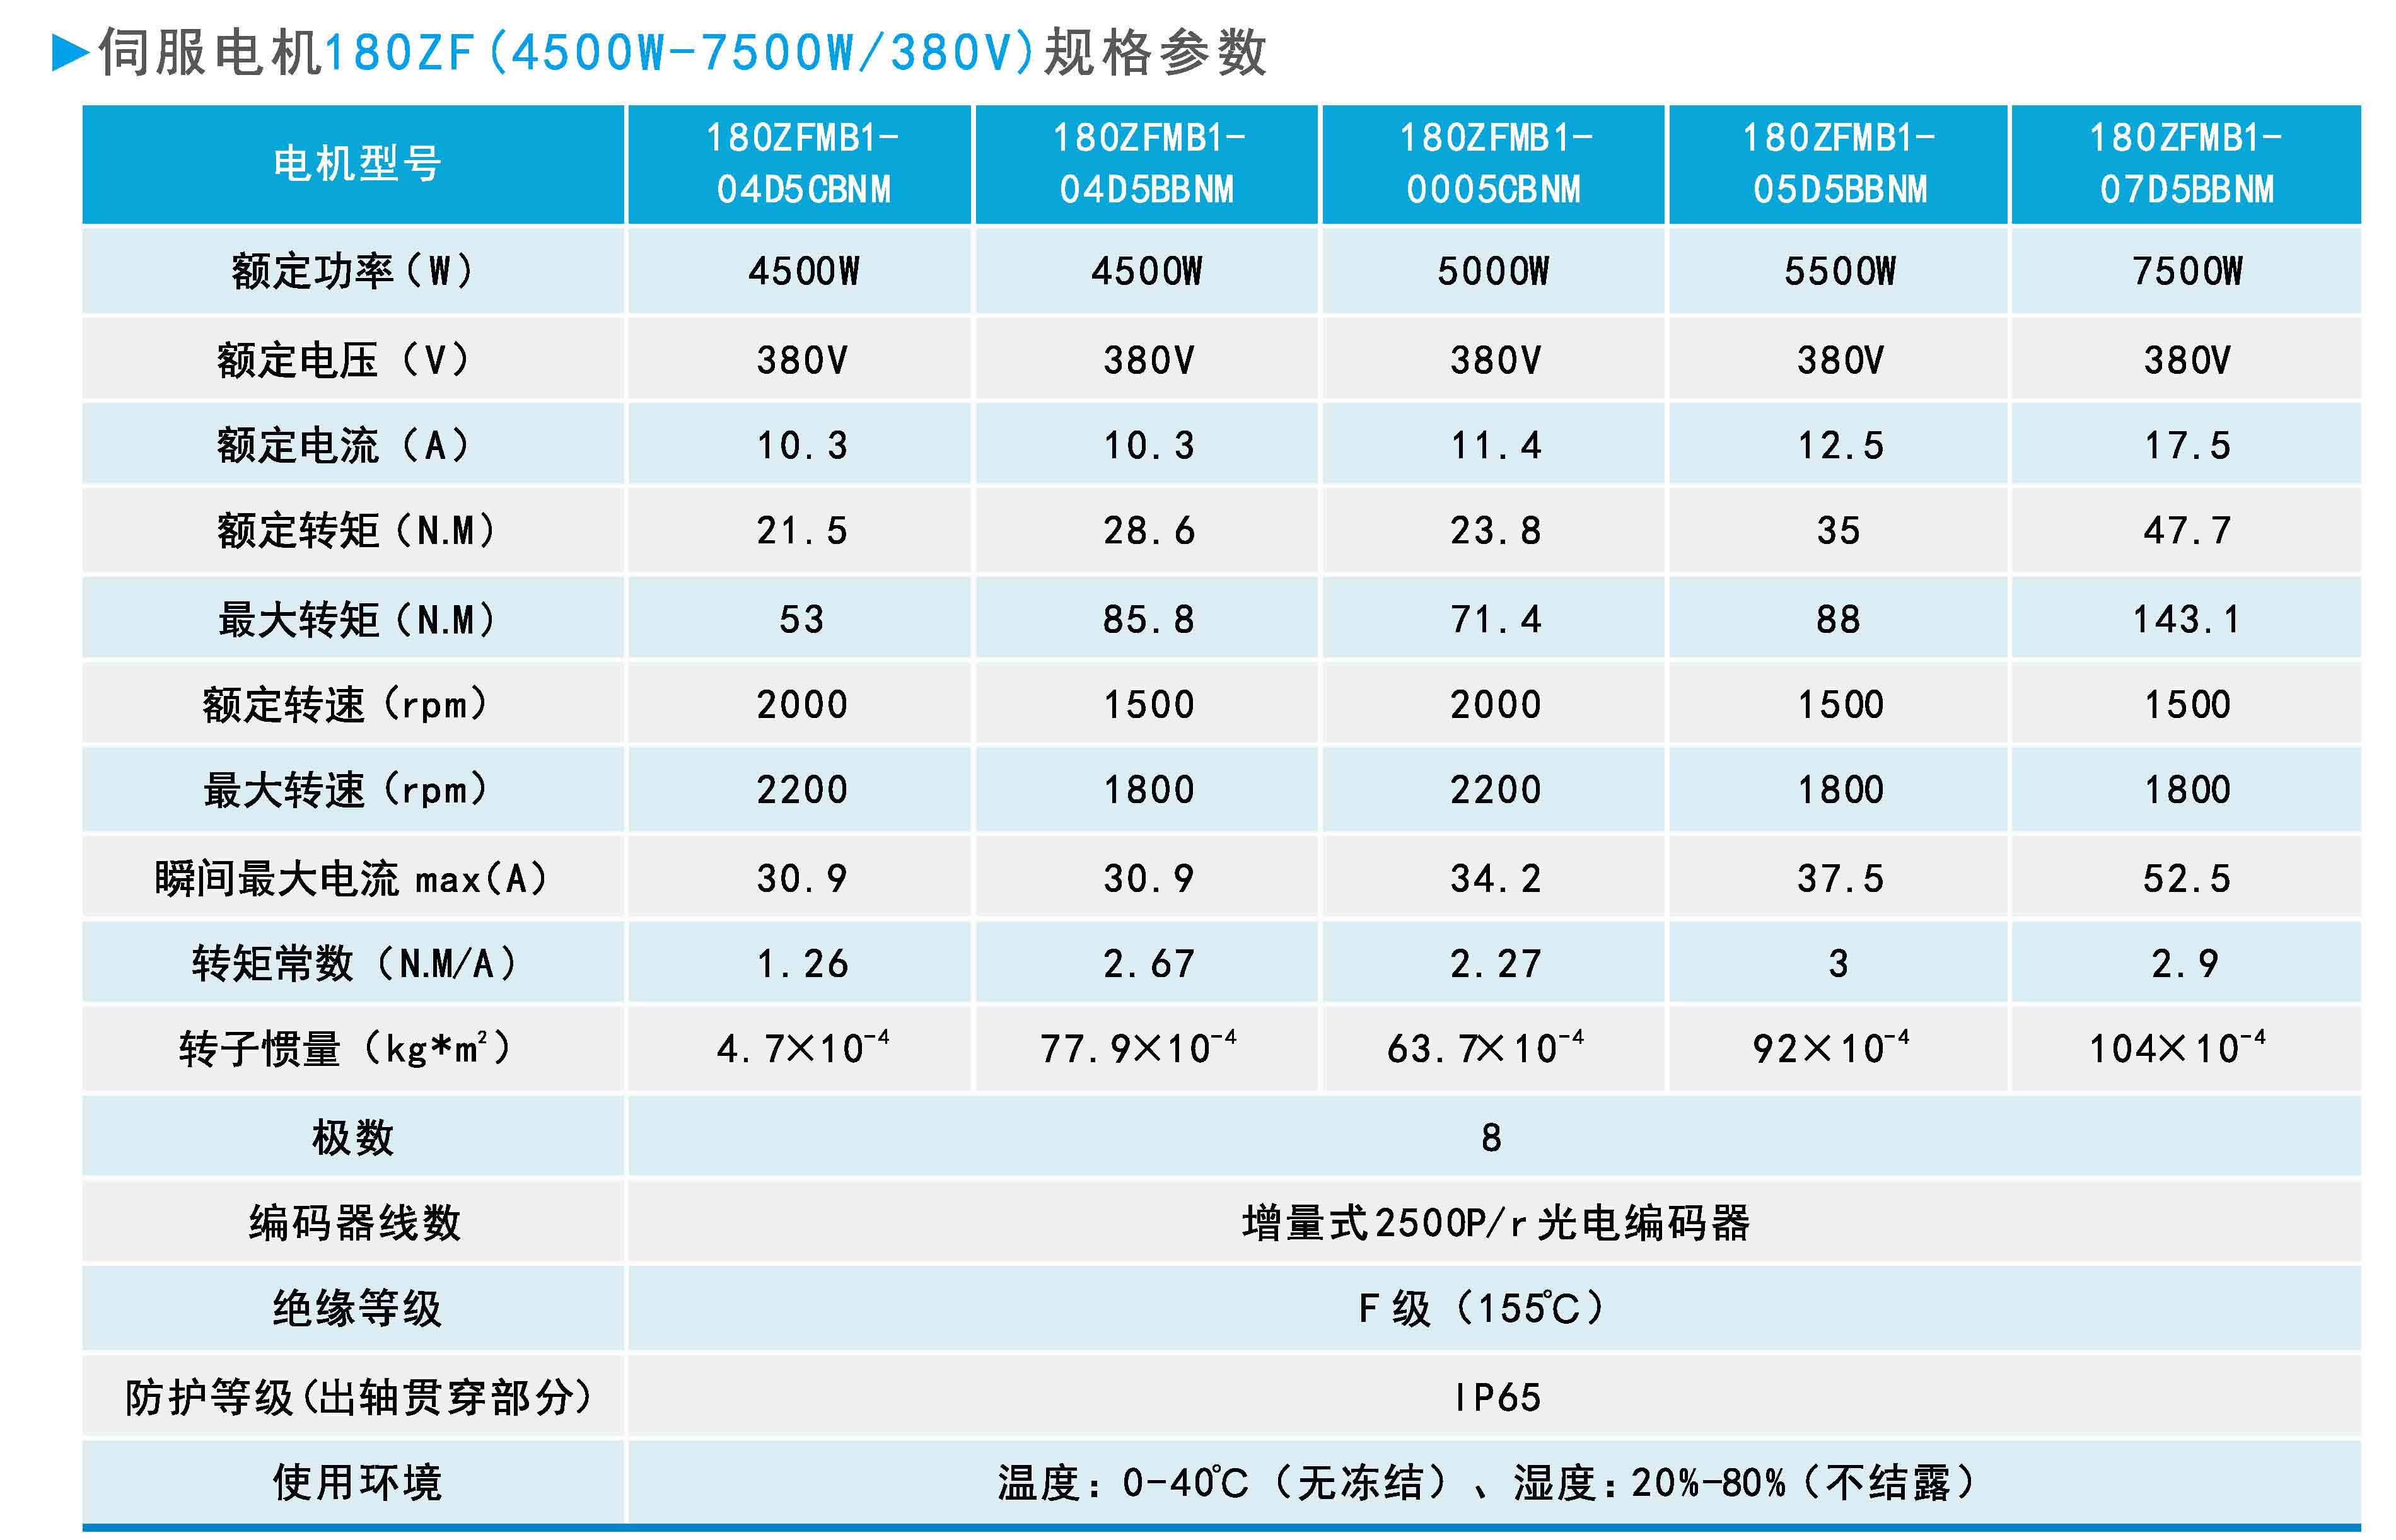 ZF180(4500W-7500W 380V)系列通用型伺服电机规格参数.jpg